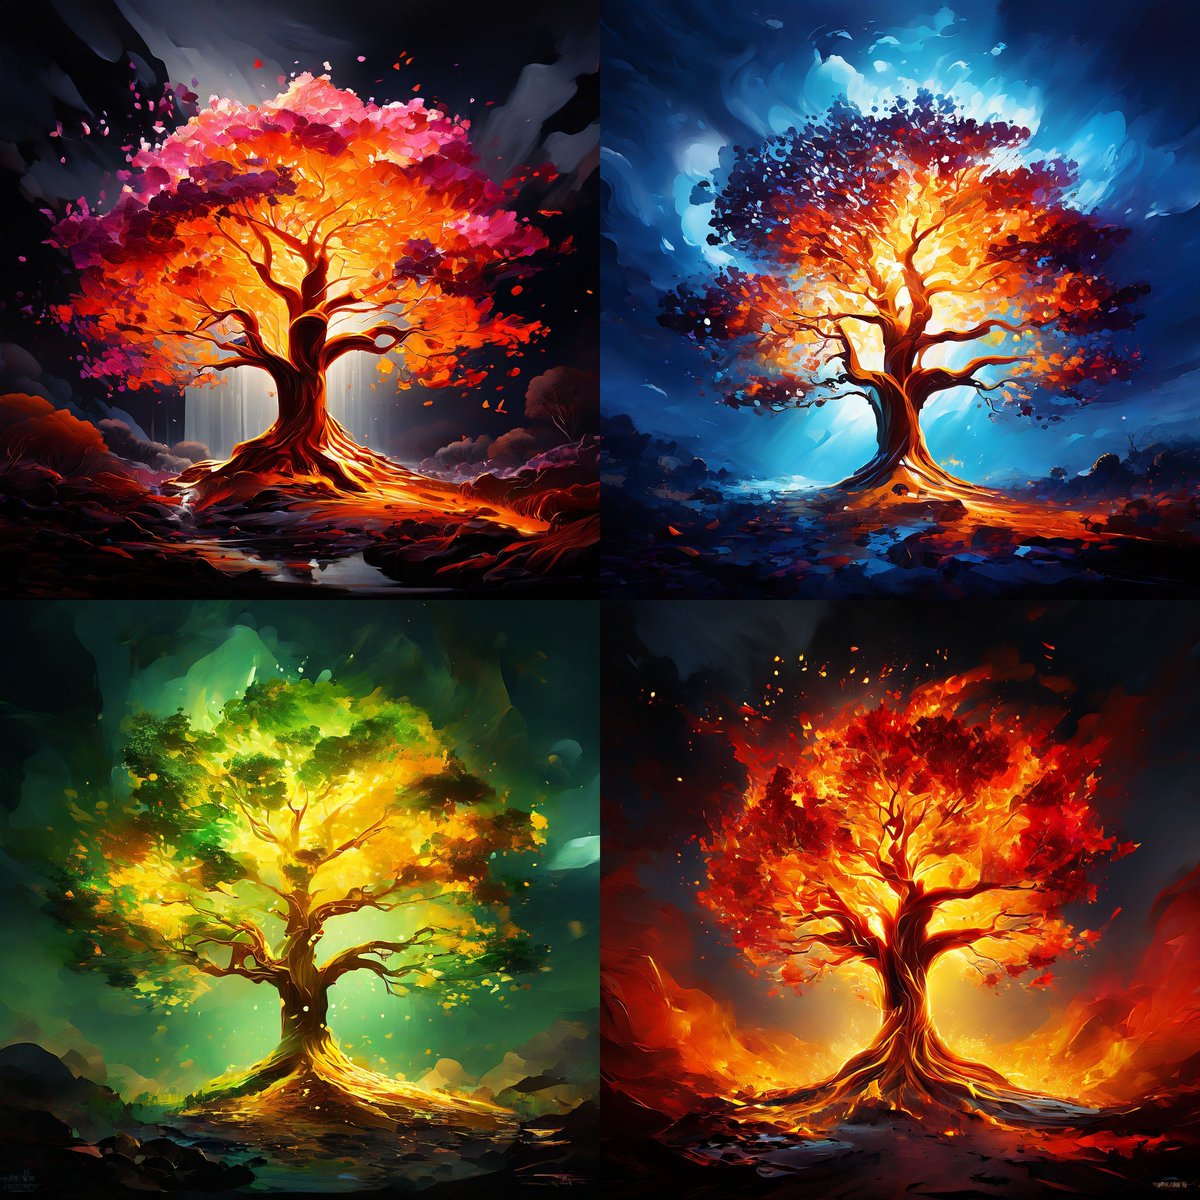 Trees of different color
{#ImageCreator #ImageSelling #imagination #images #Bluey #picture #AIart #artist #artwork #artion #artshare #ArtofLegends #AIグラビア #AI美女 #AIイラスト︎ #NFTCommunity #nftcollector #NFTartist #stablediffusion #NFT #AI #Airdrops #opensea #leonardoai }